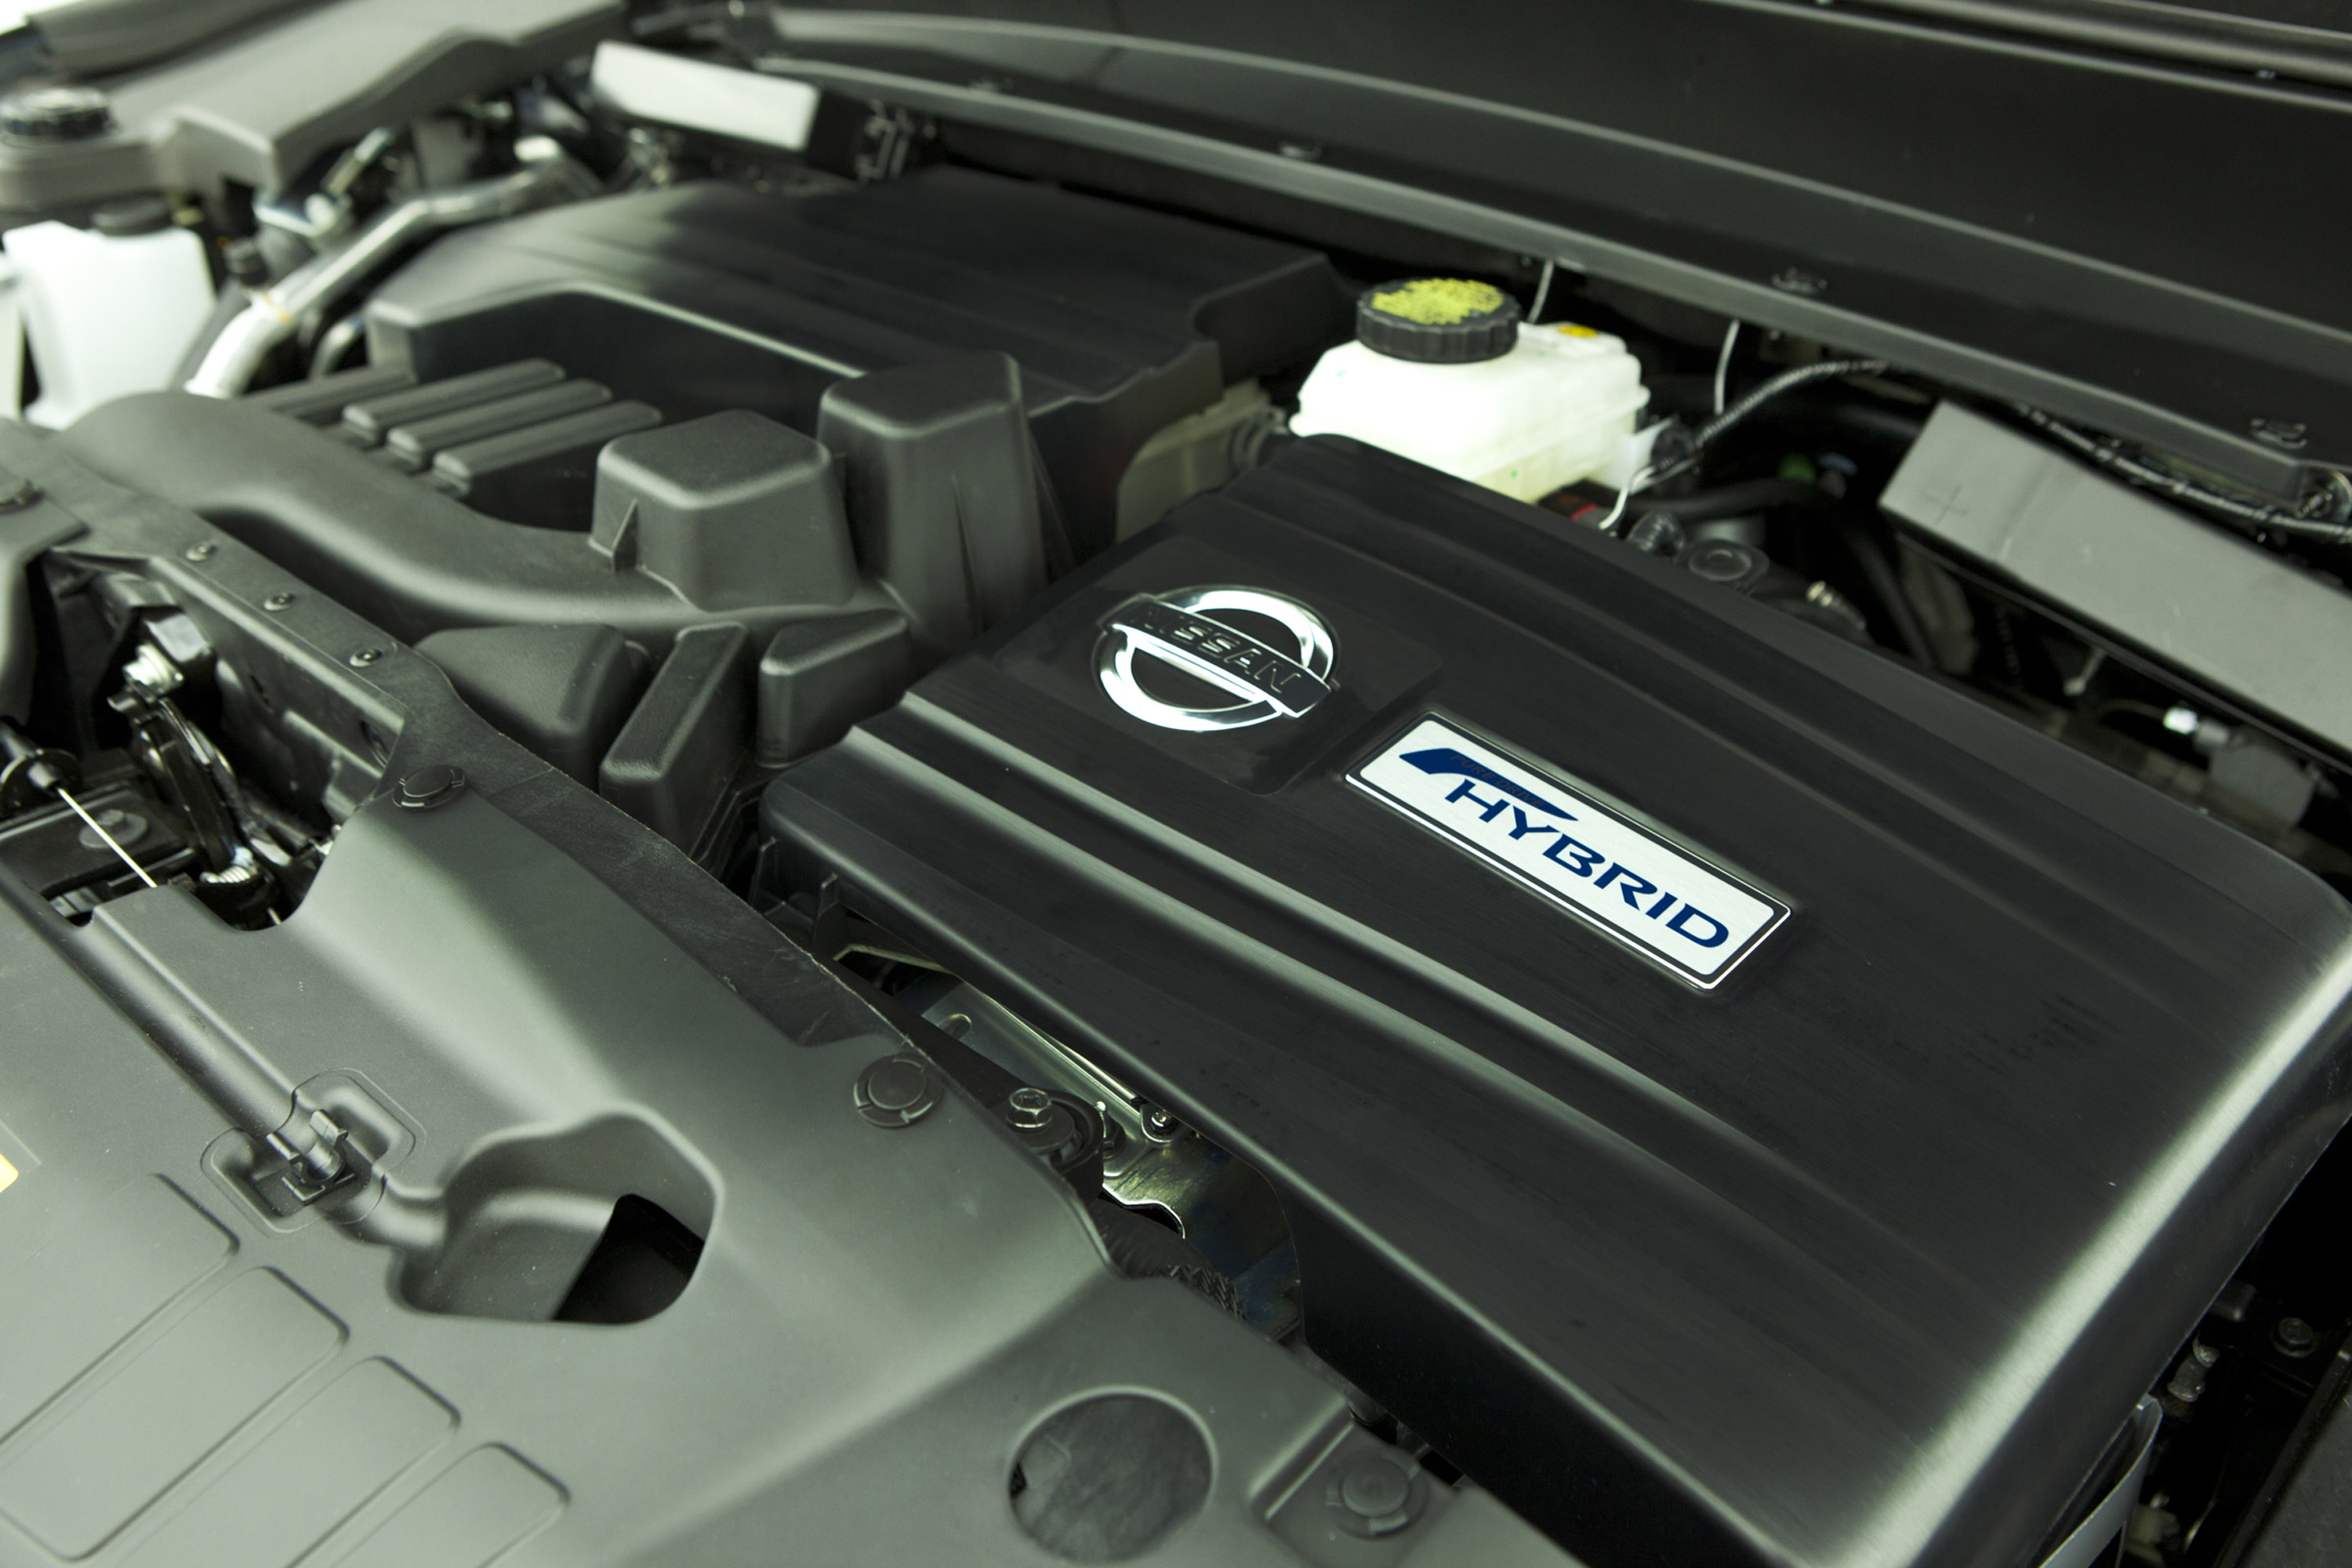 Nissan Pathfinder Hybrid